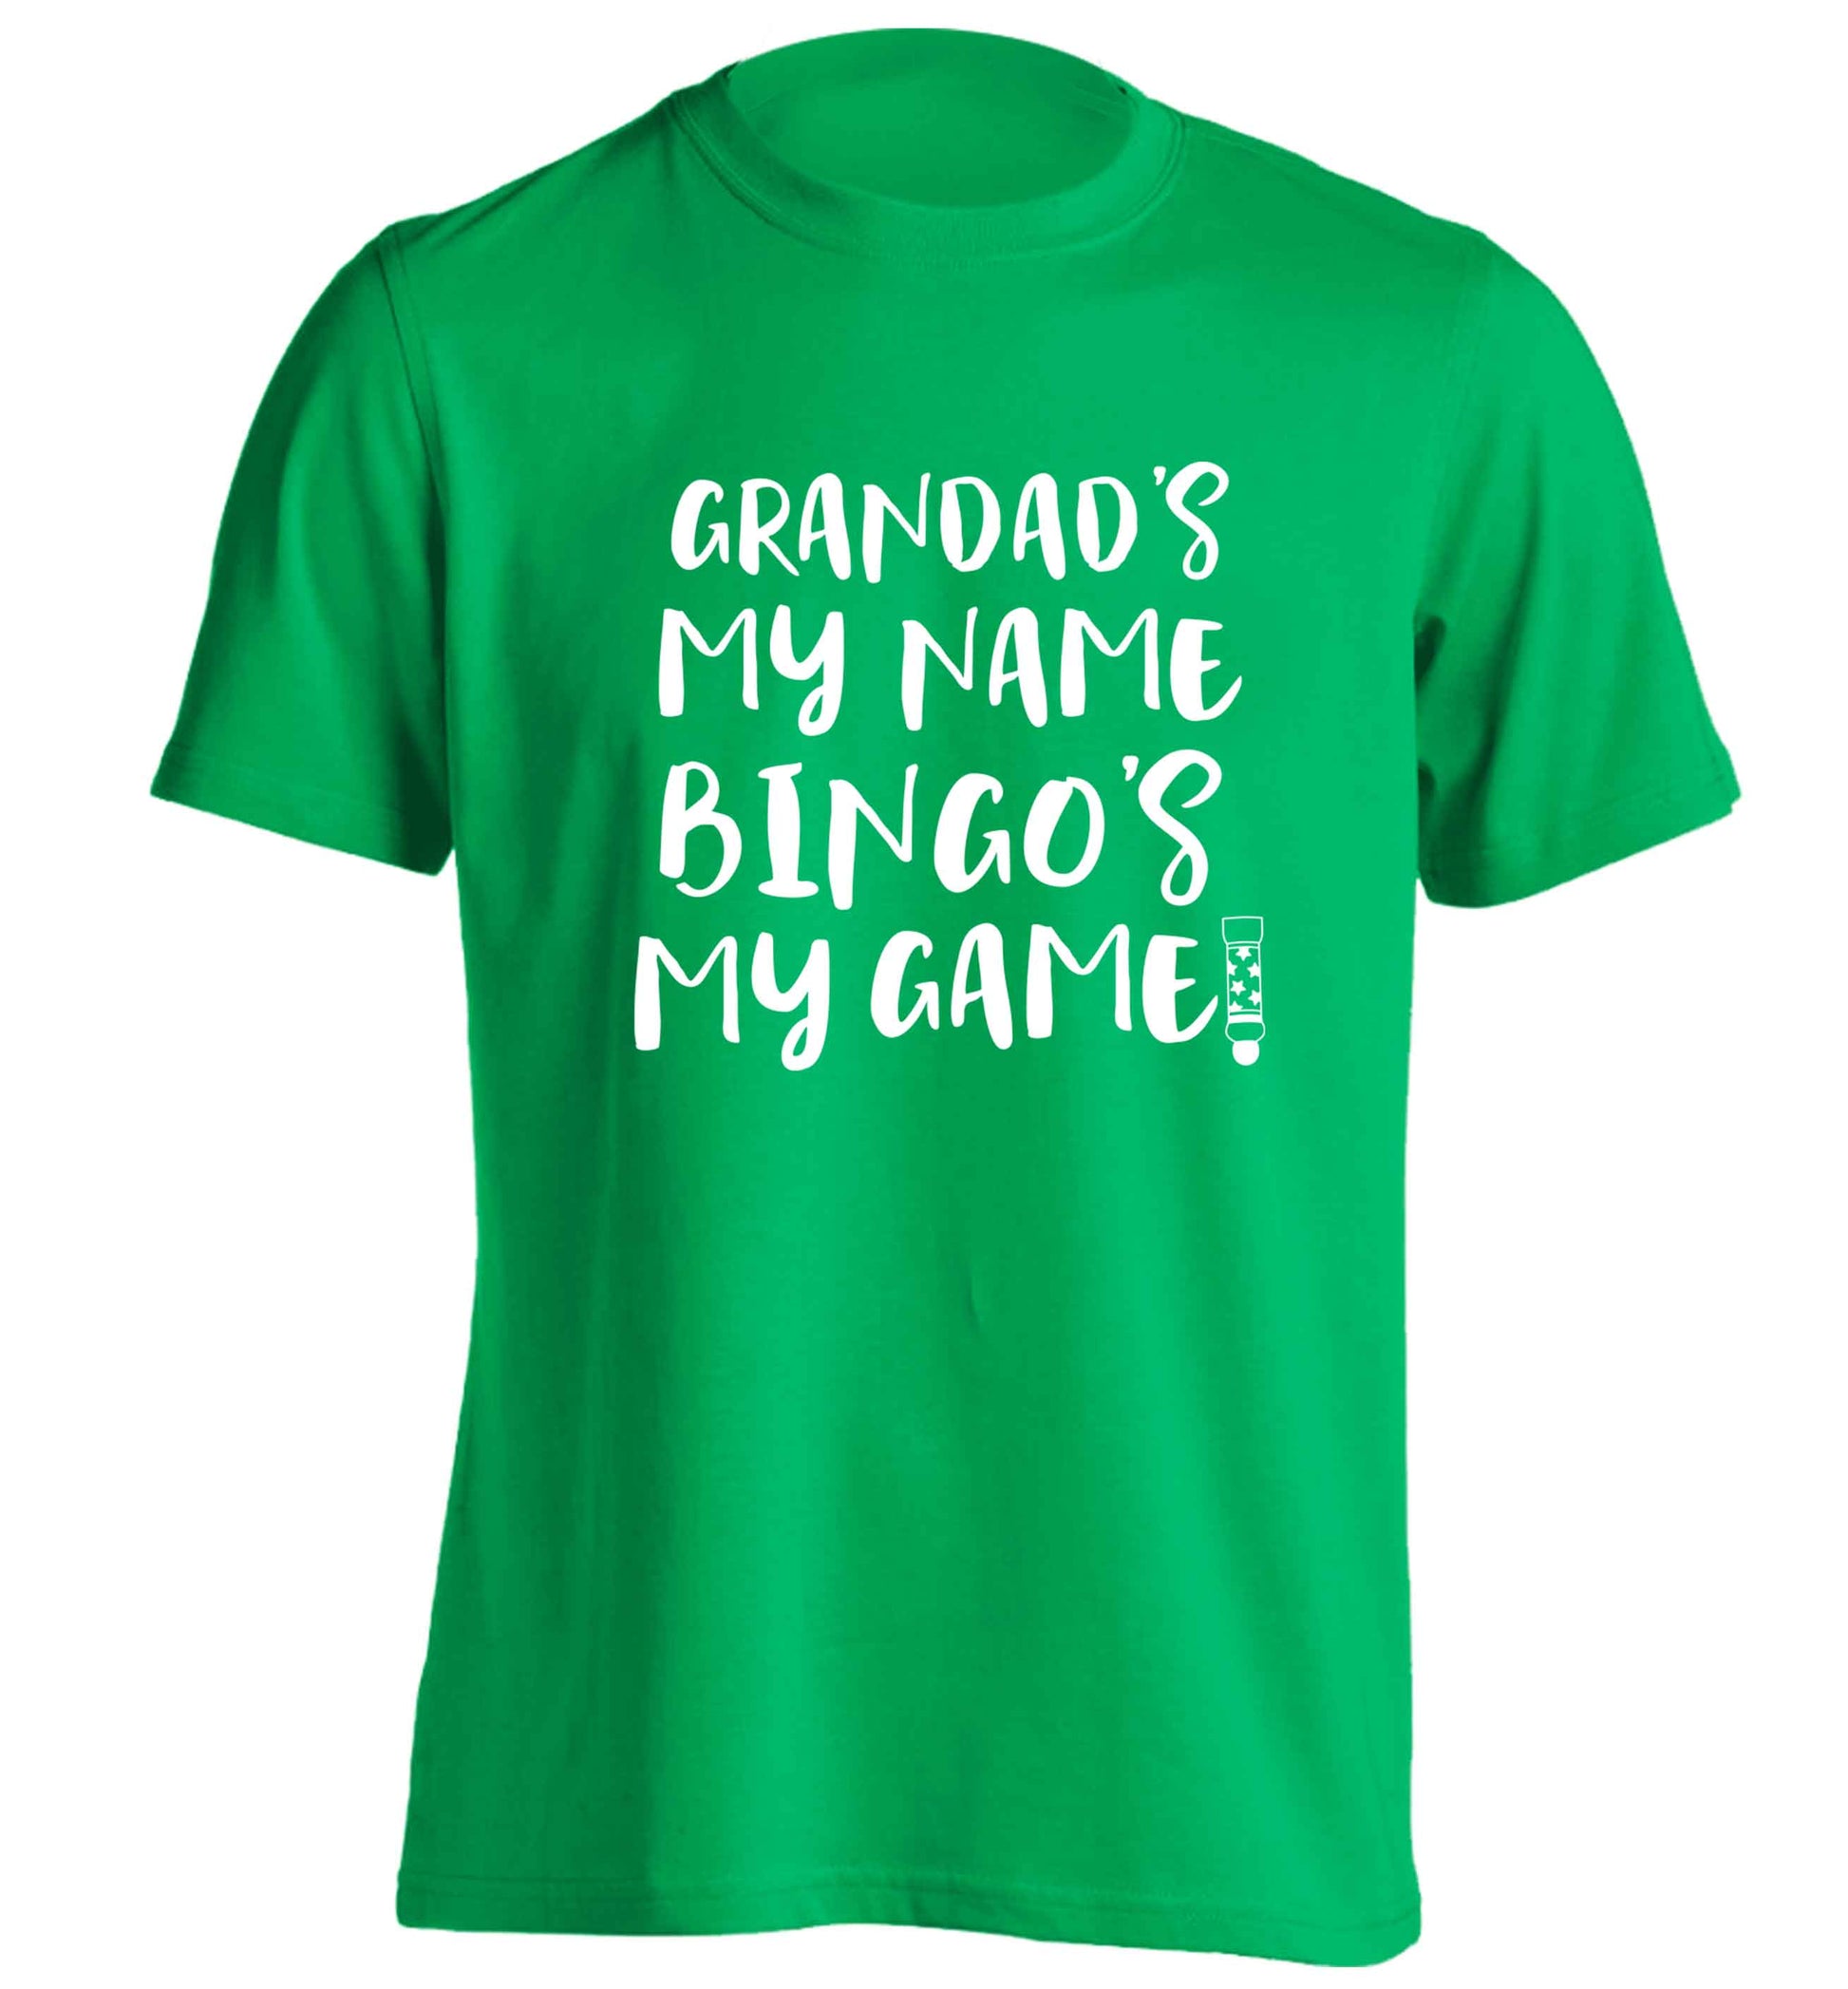 Grandad's my name bingo's my game! adults unisex green Tshirt 2XL